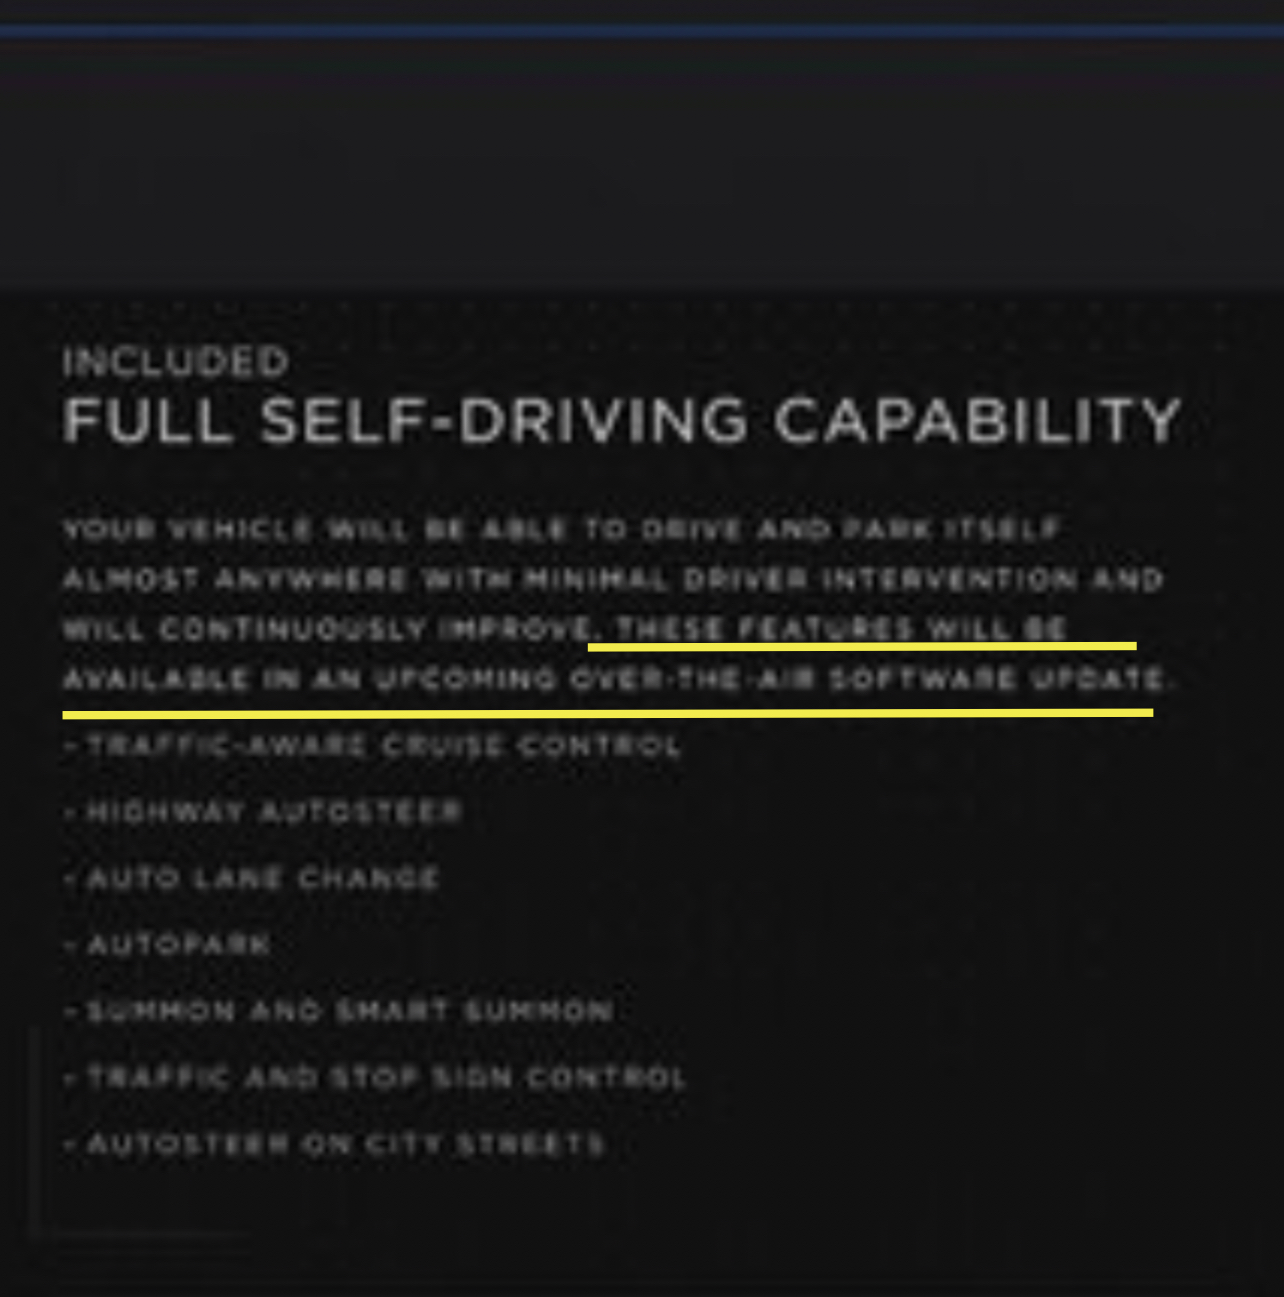 Tesla Cybertruck "Cybertruck is necessarily lowest priority for FSD..." - Elon Musk (12/30/23) B9EB4B35-EA5D-44D1-89B6-FB9BF2697656